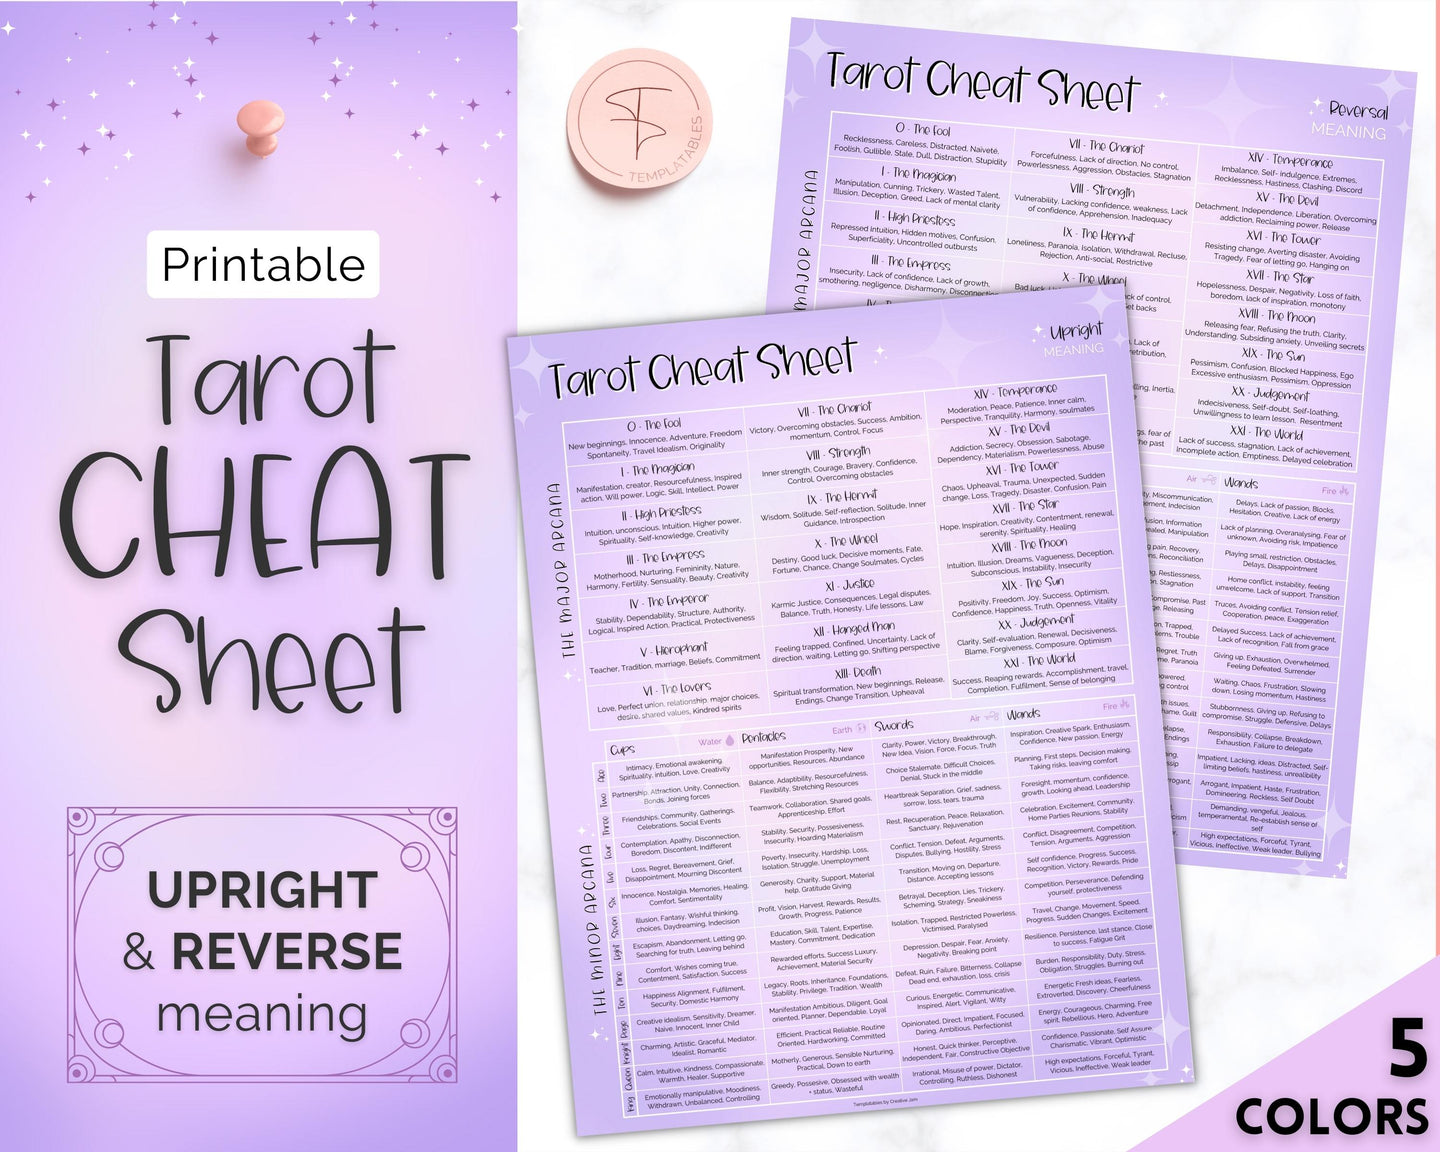 Tarot Cheat Sheet Printable |  Learn Tarot Card Readings for Beginners, Tarot Spreads, Upright & Reverse meanings | Sky Purple